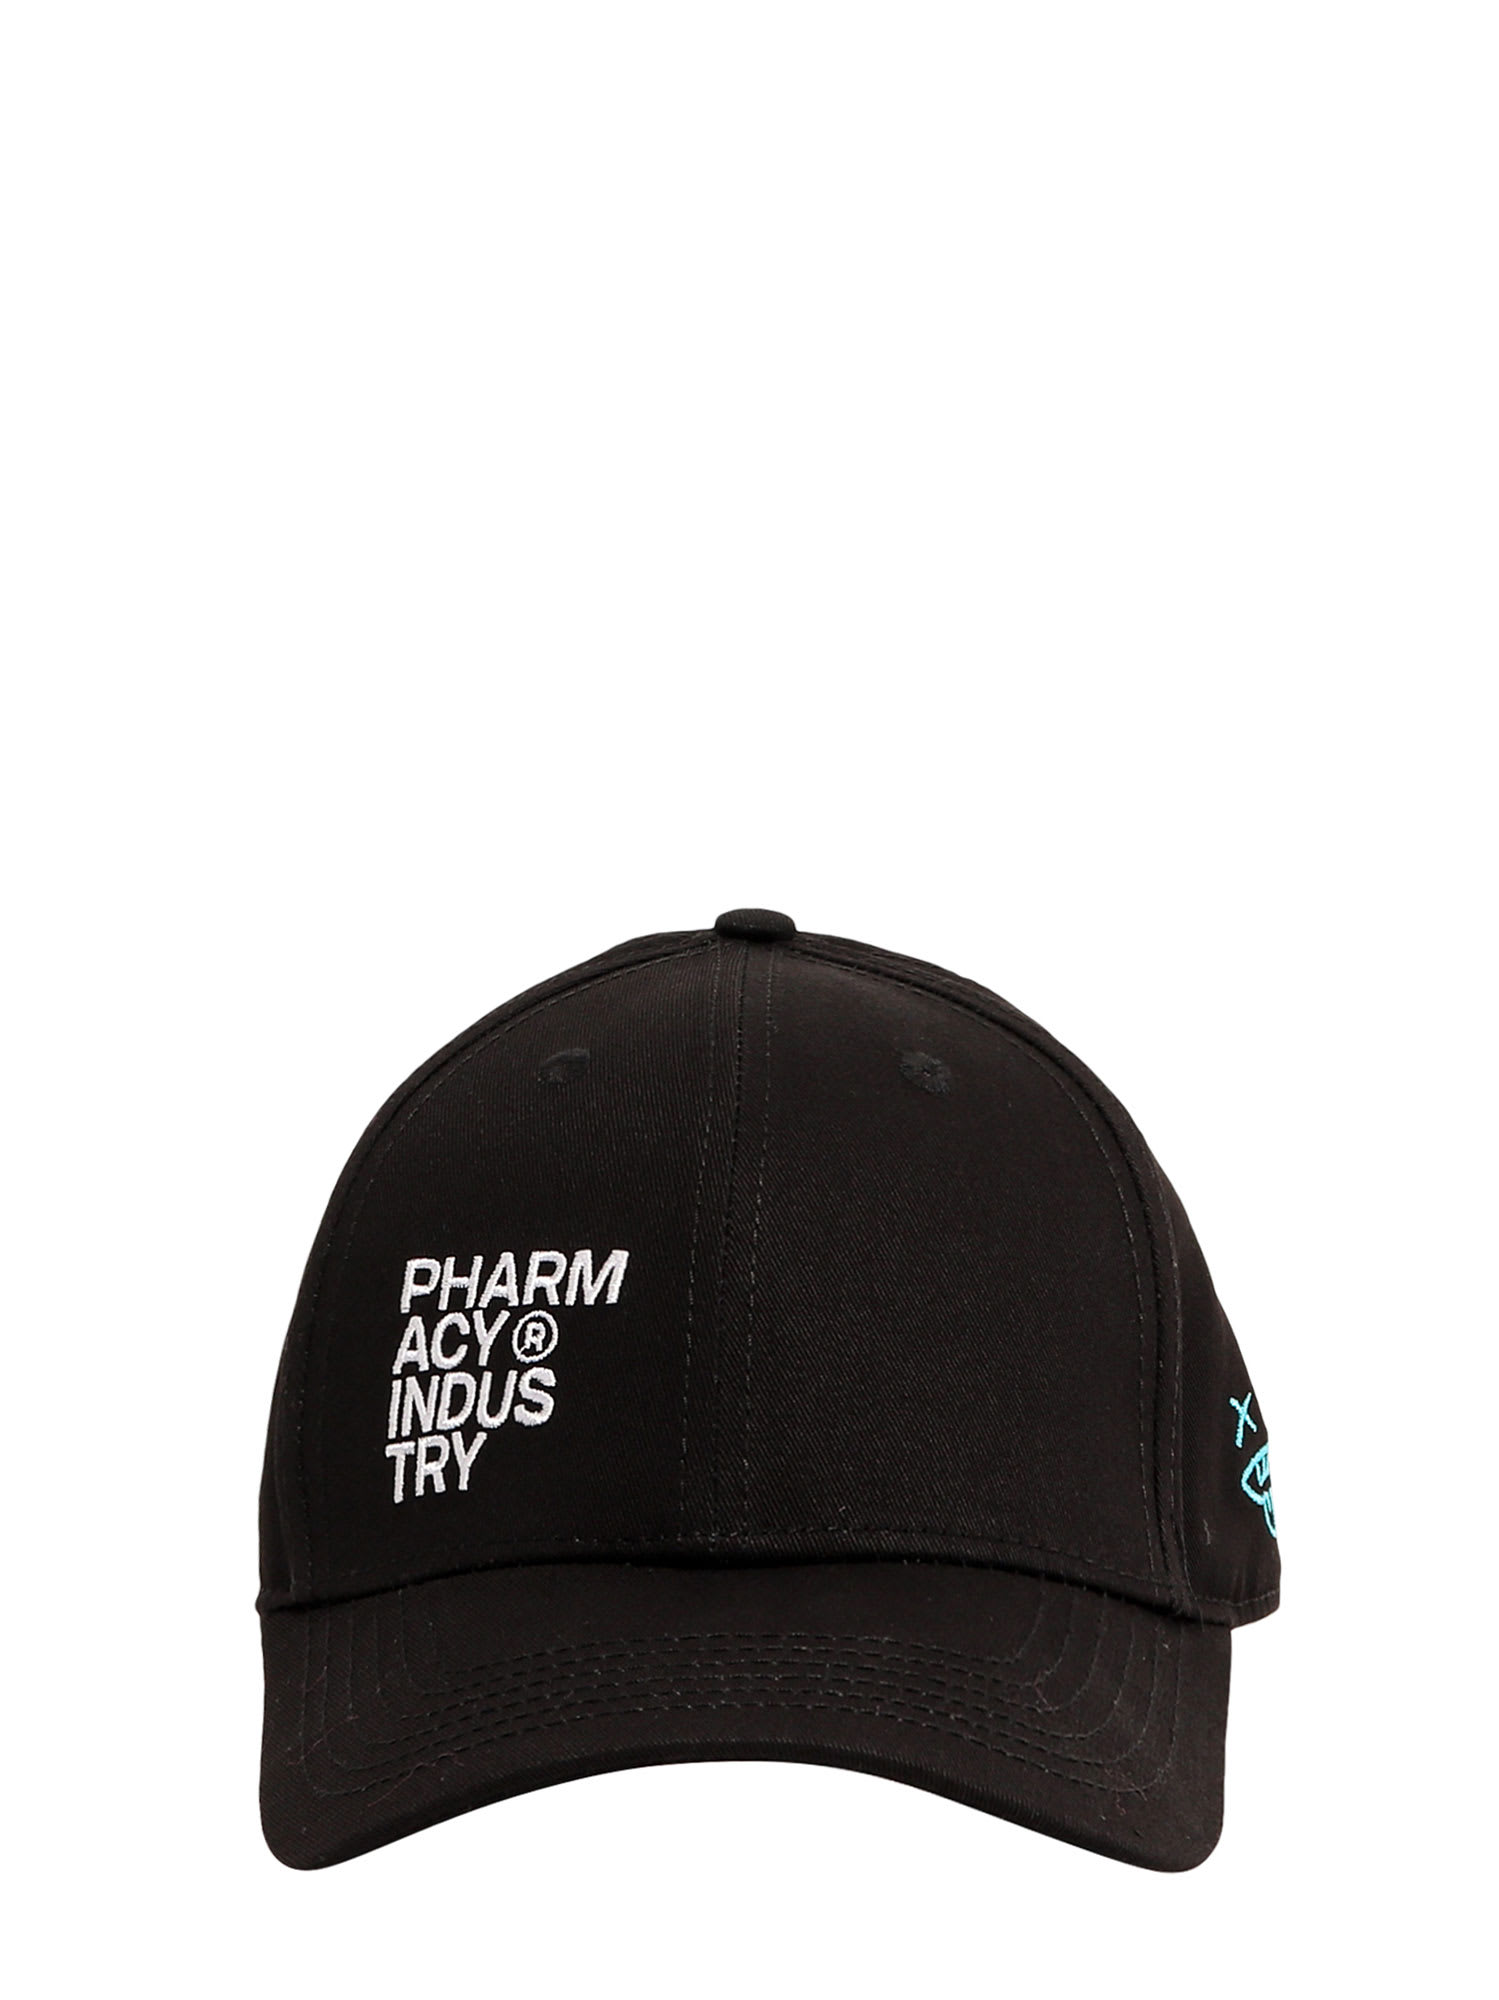 Pharmacy Industry Hat